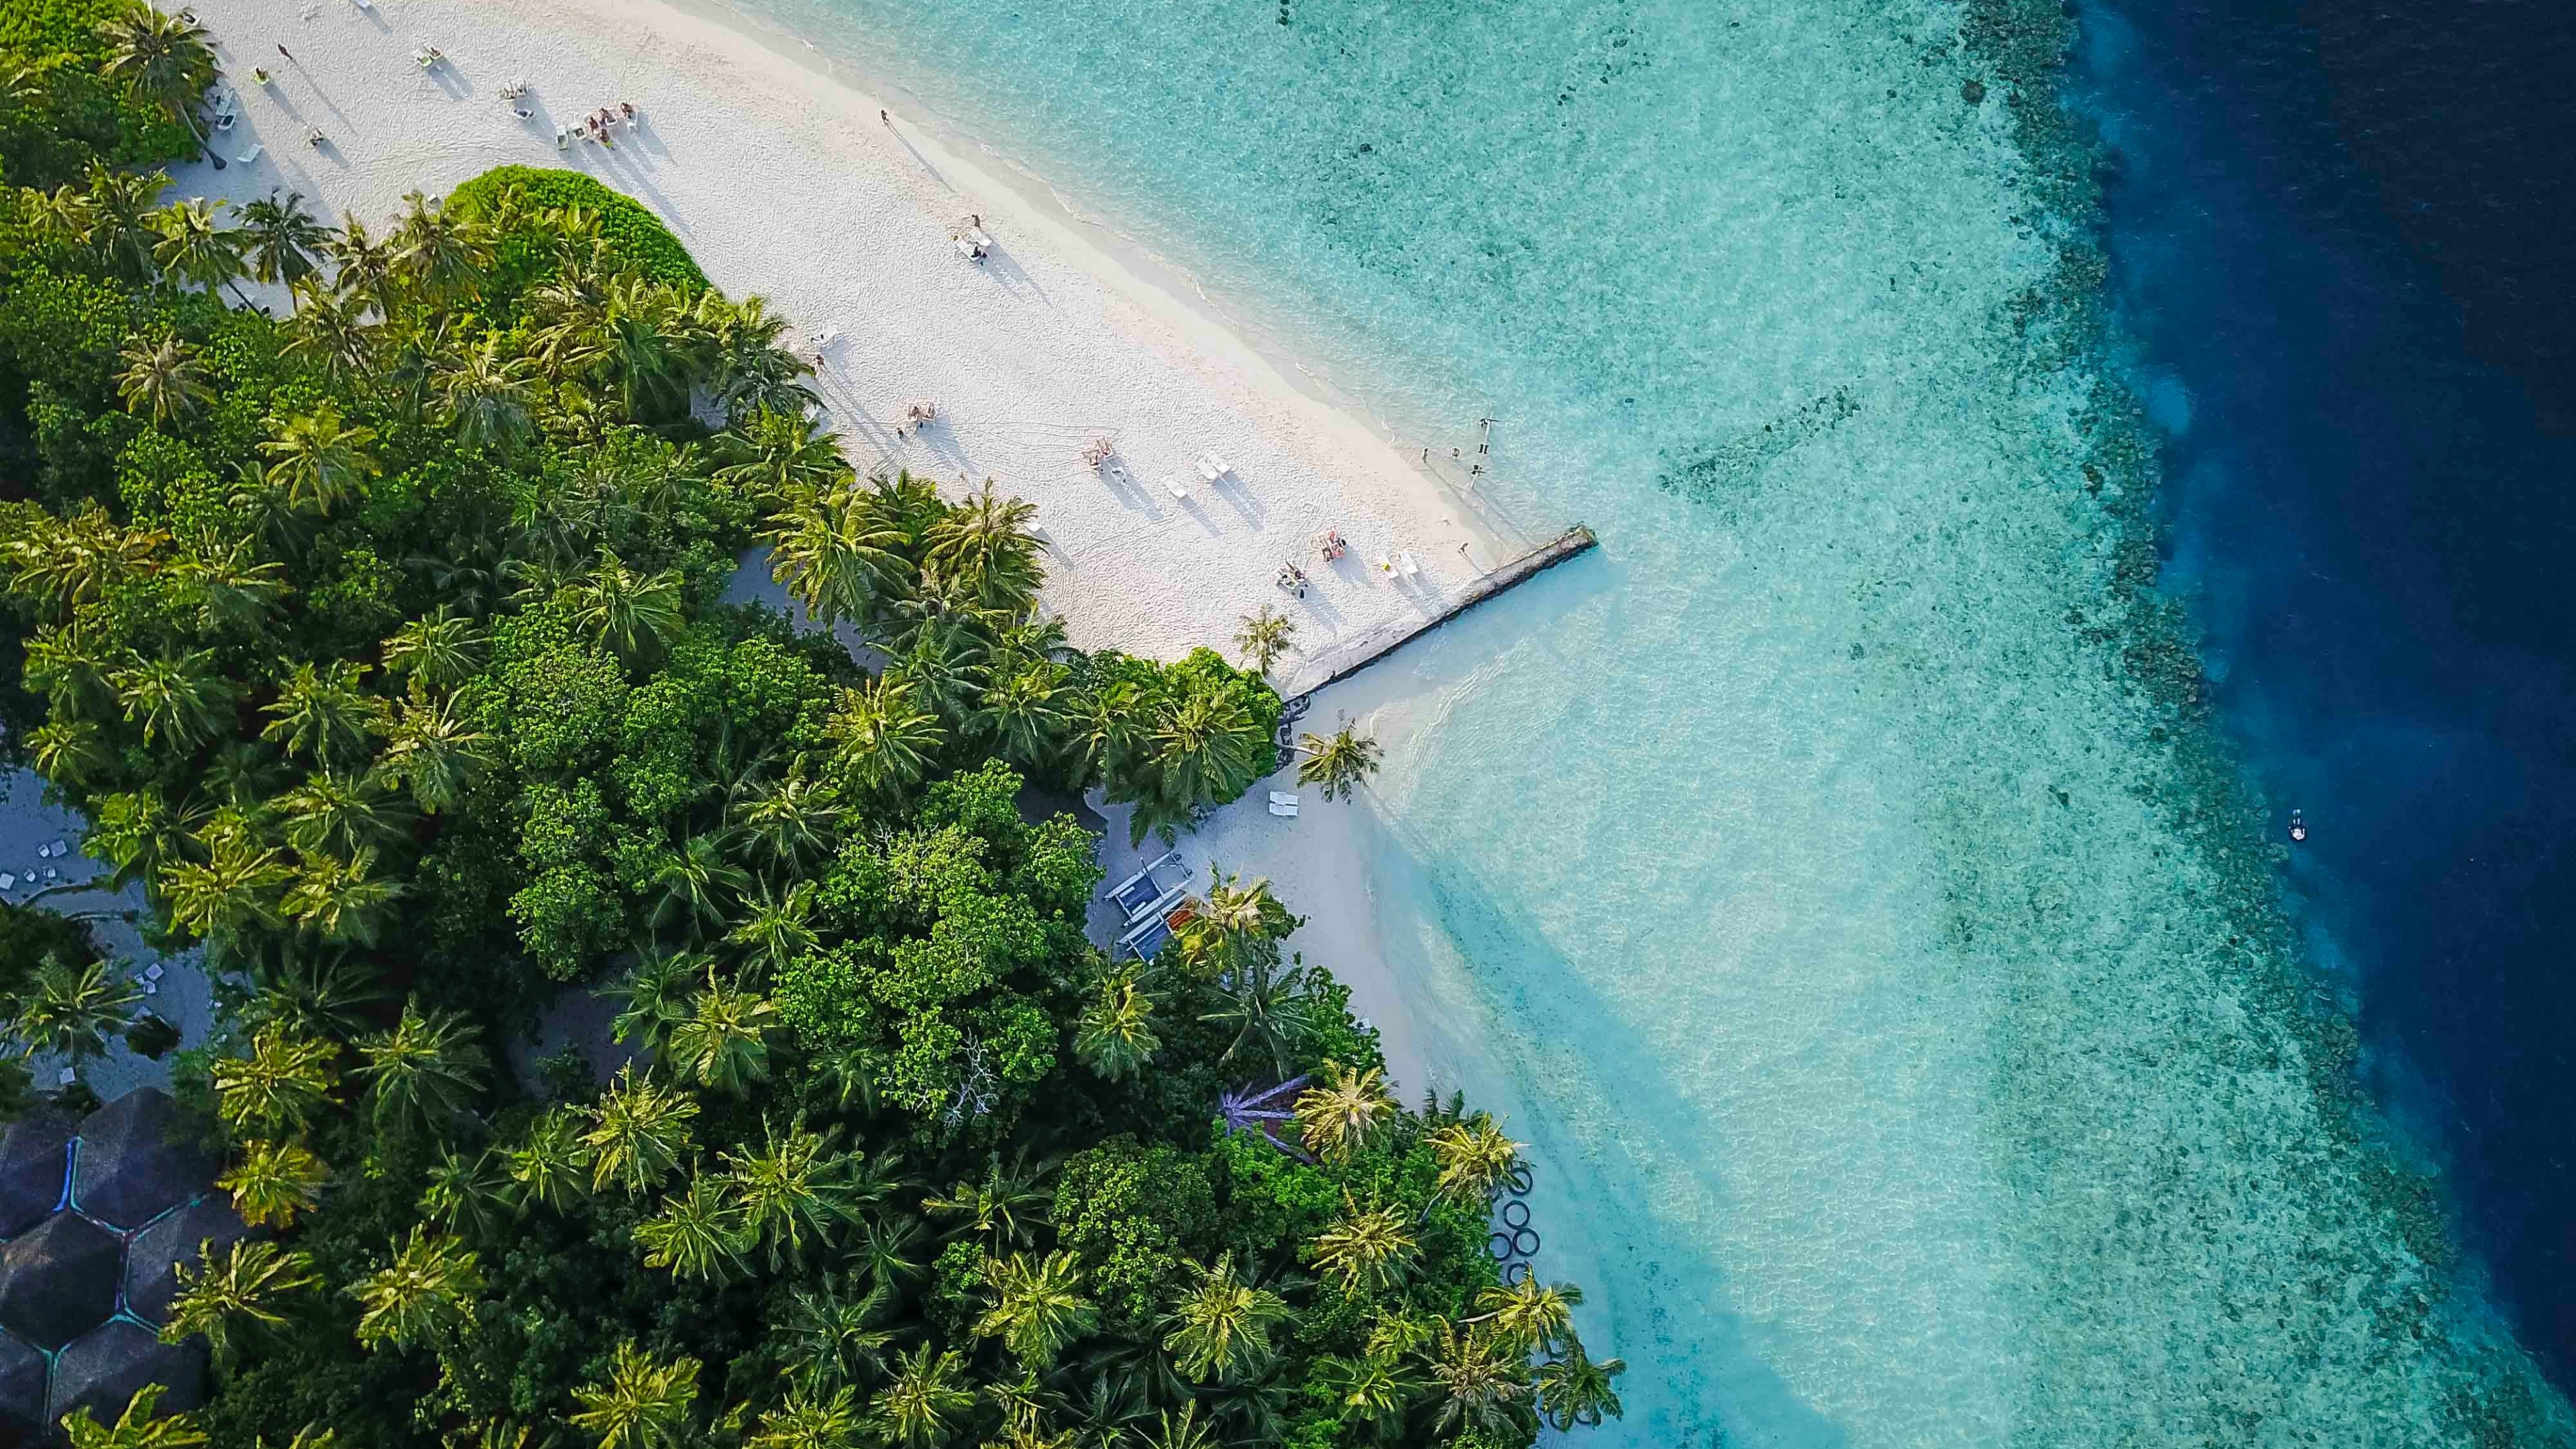 Download 3840x2160 wallpaper maldives, island, tropical, aerial view, beach, 4k, uhd 16: widescreen, 3840x2160 HD image, background, 16210